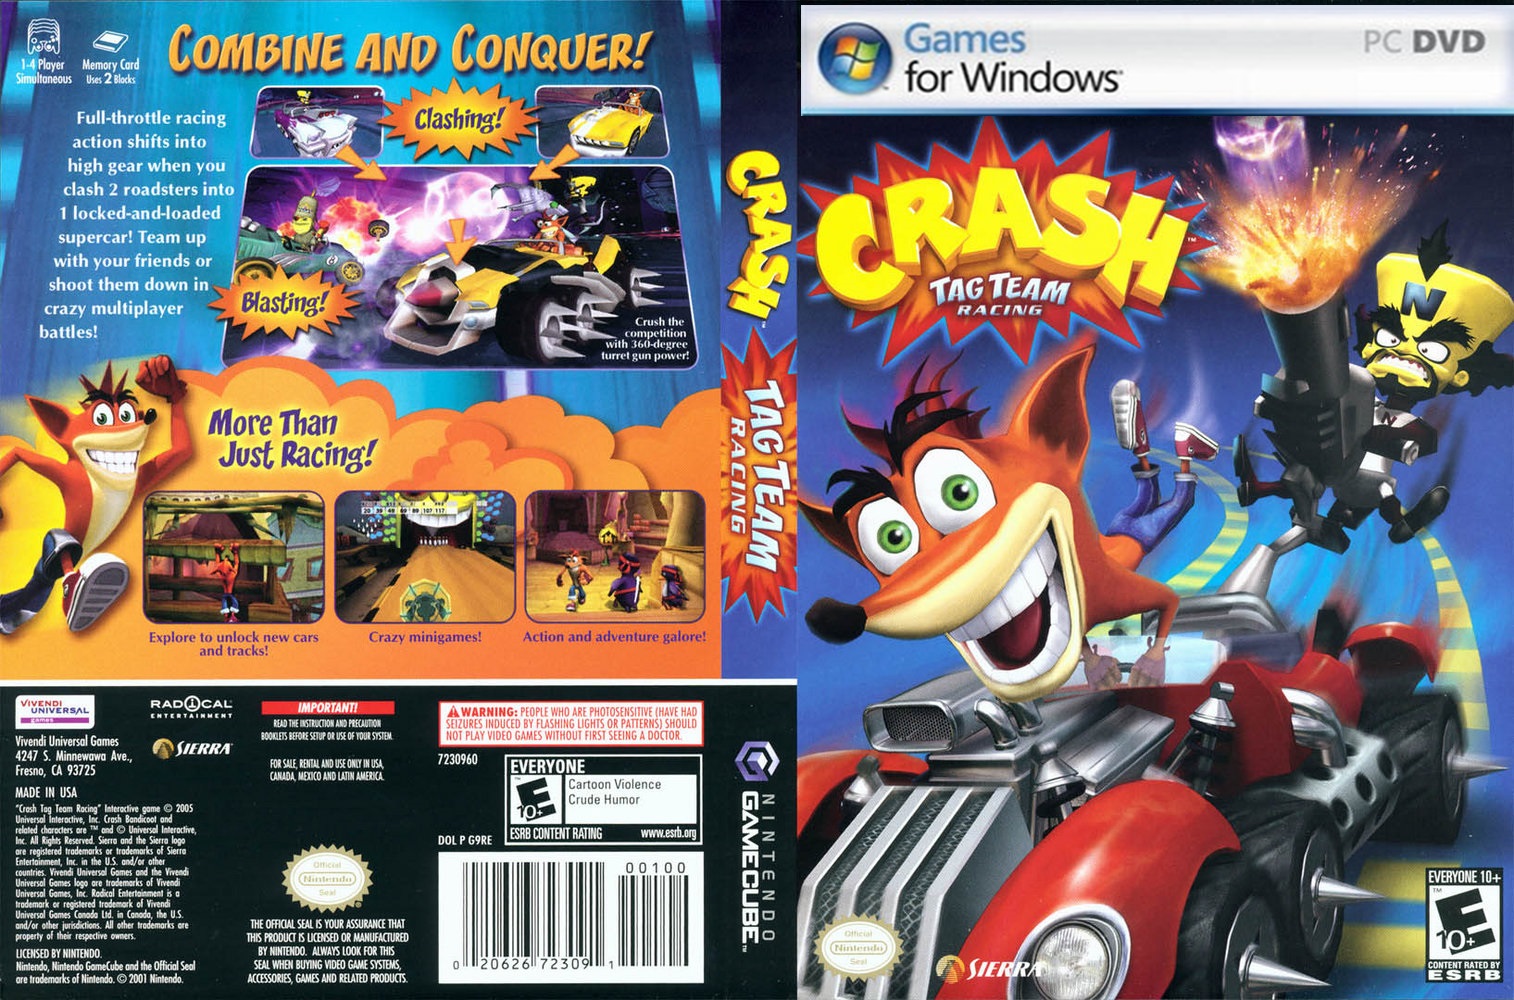 Descarga Crash Tag Team Racing para PC